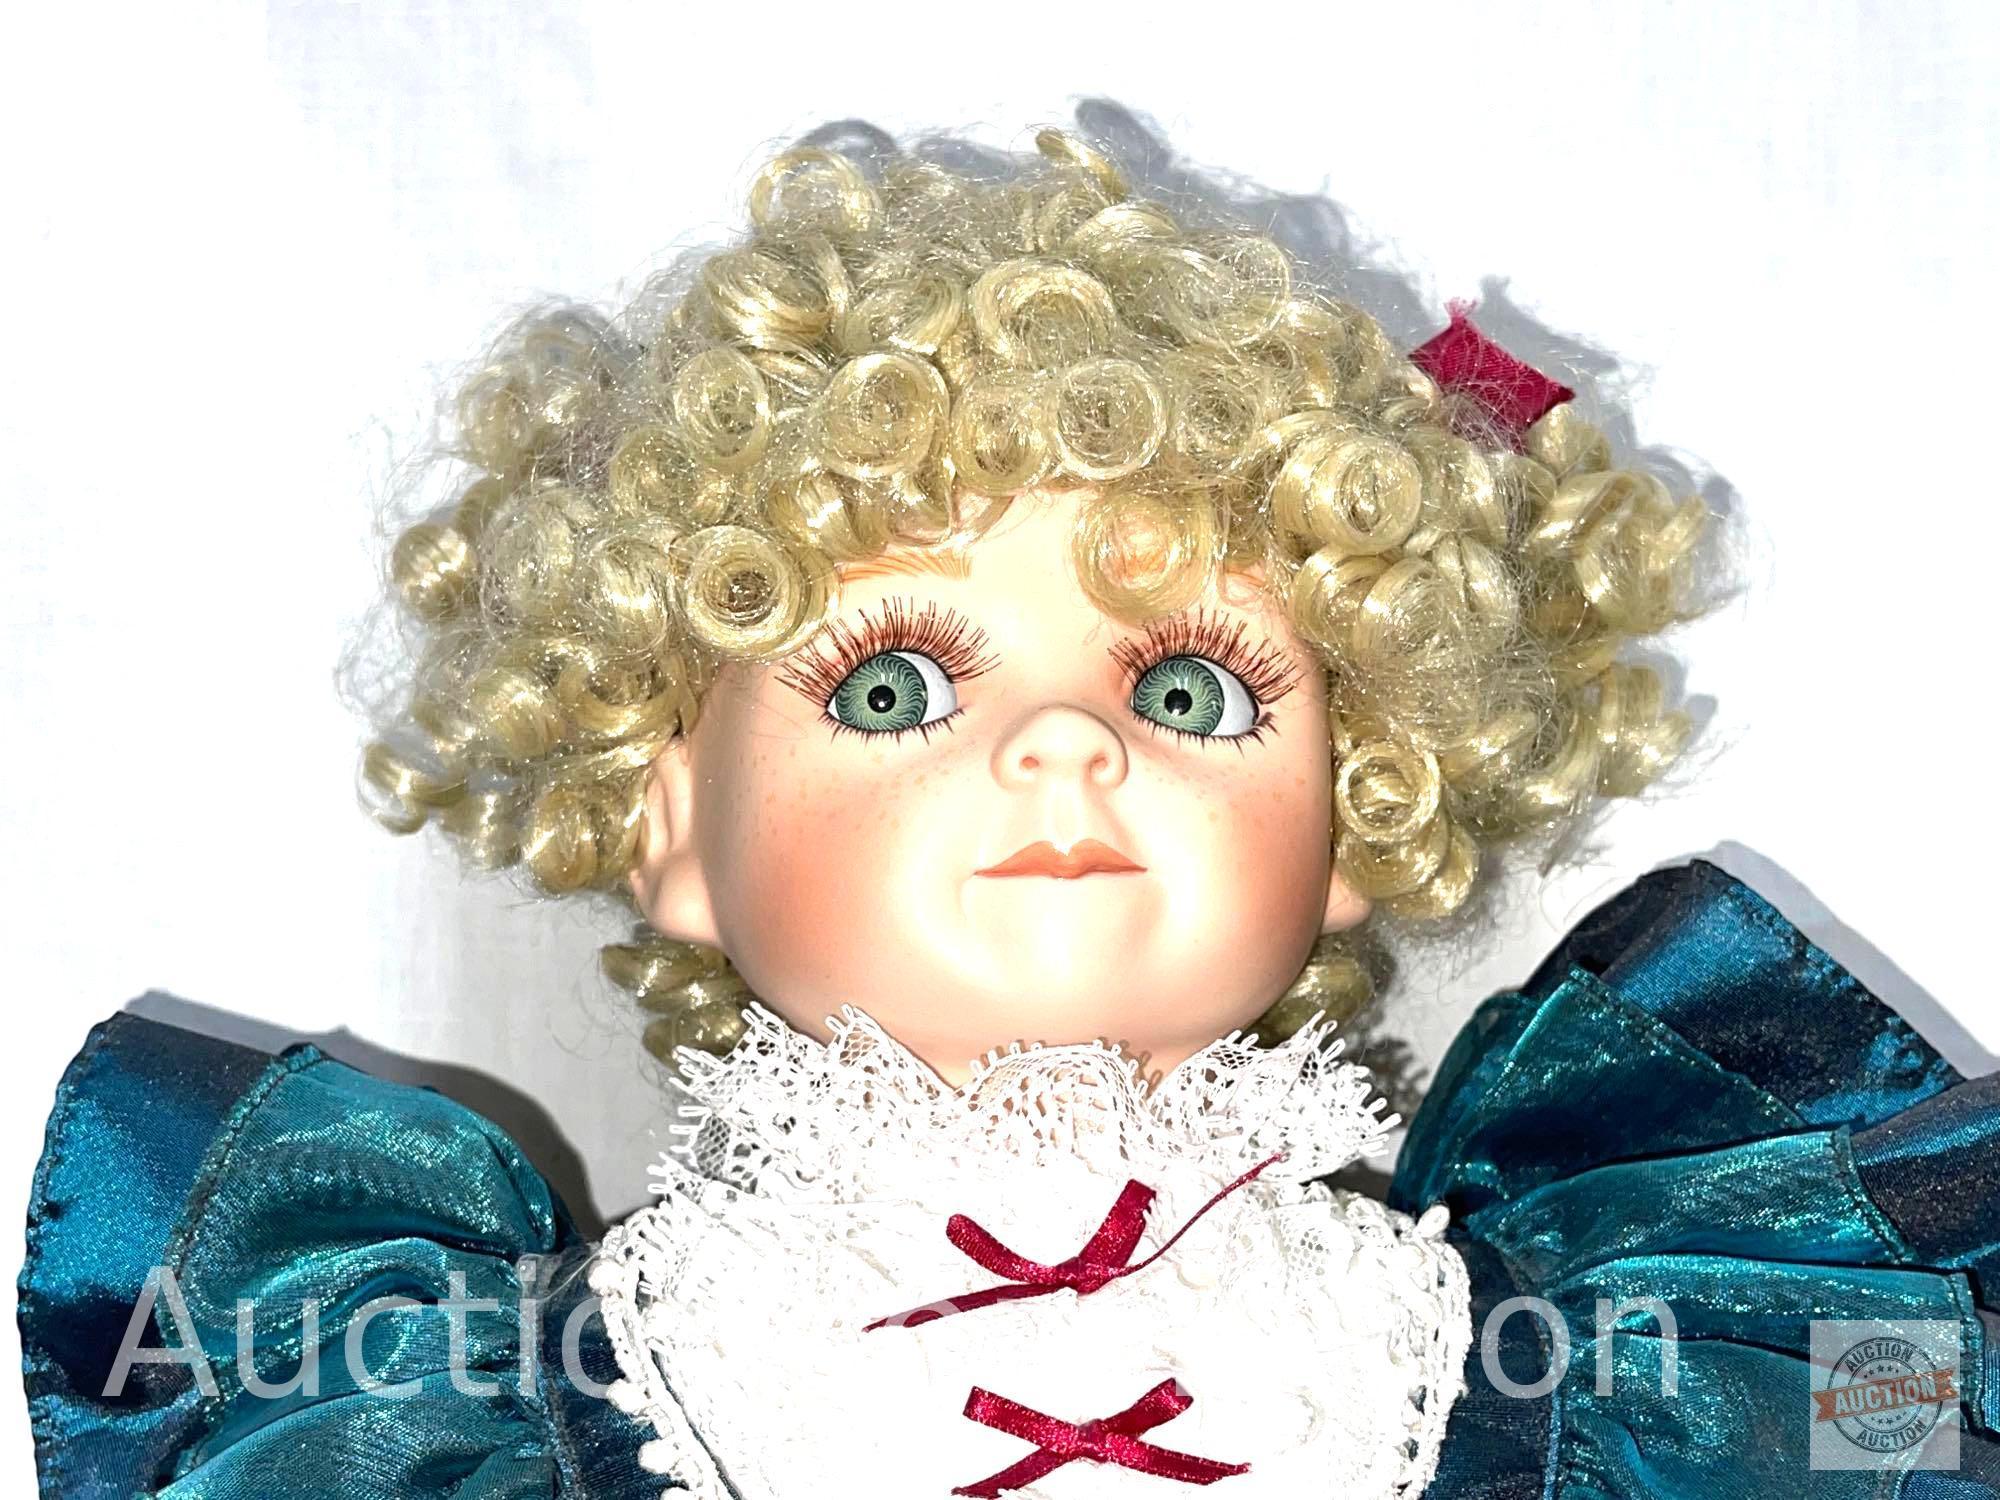 Doll - Porcelain Collector Doll, Seymour Mann, 20"h